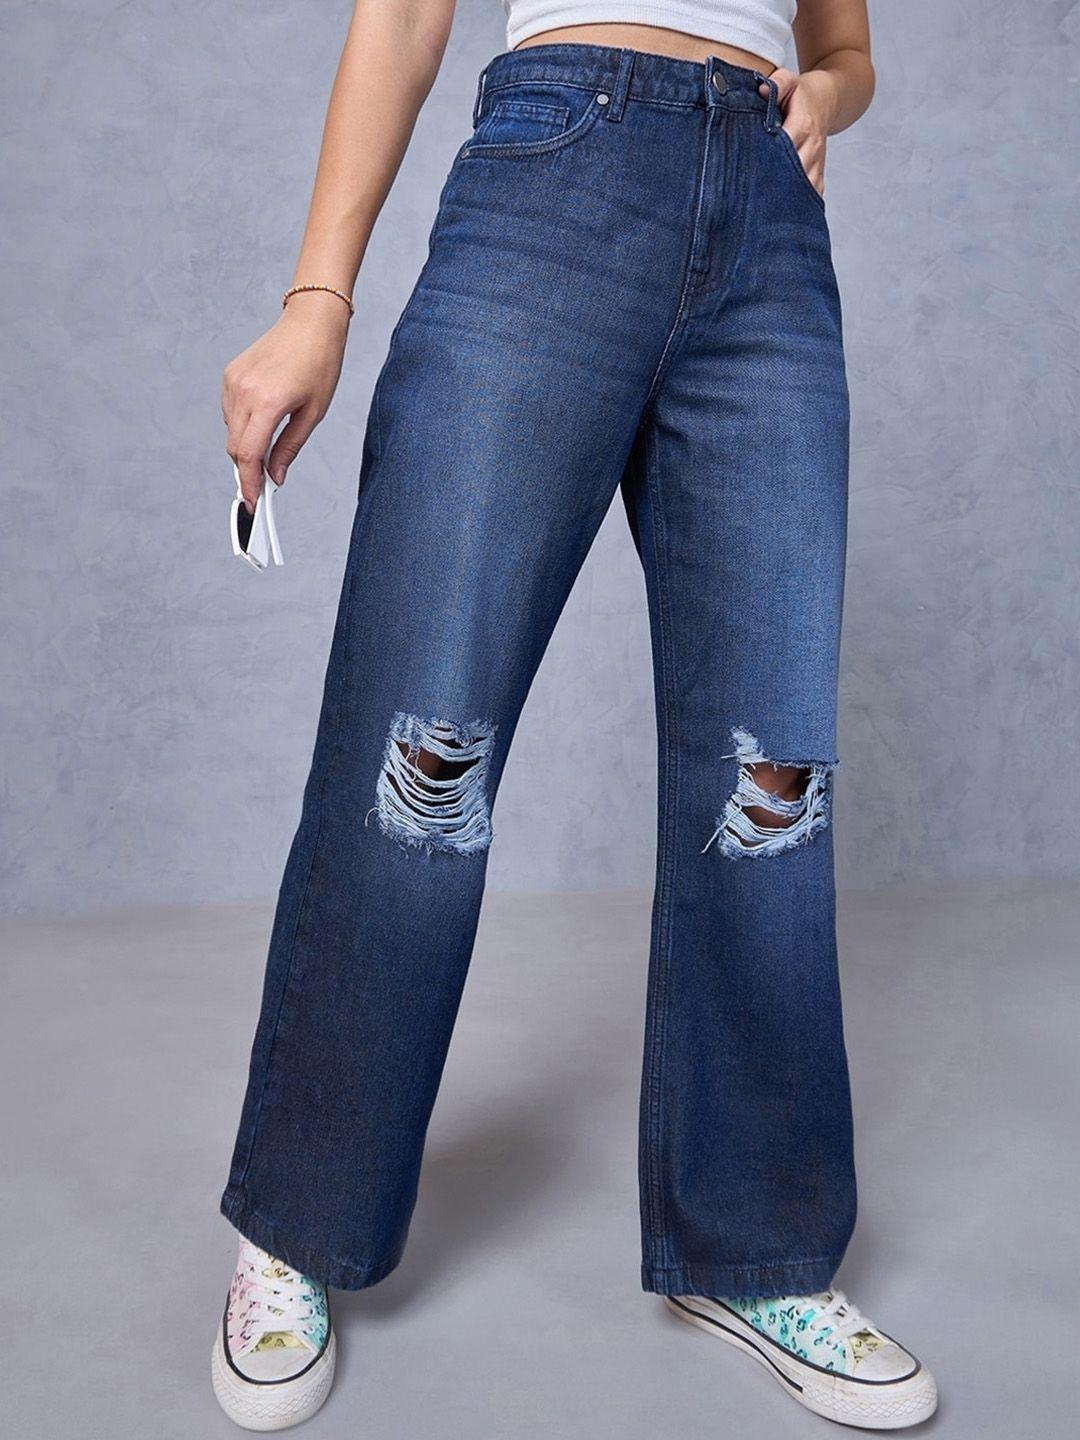 Bewakoof Women Wide Leg High-Rise Mildly Distressed Light Fade Cotton Jeans